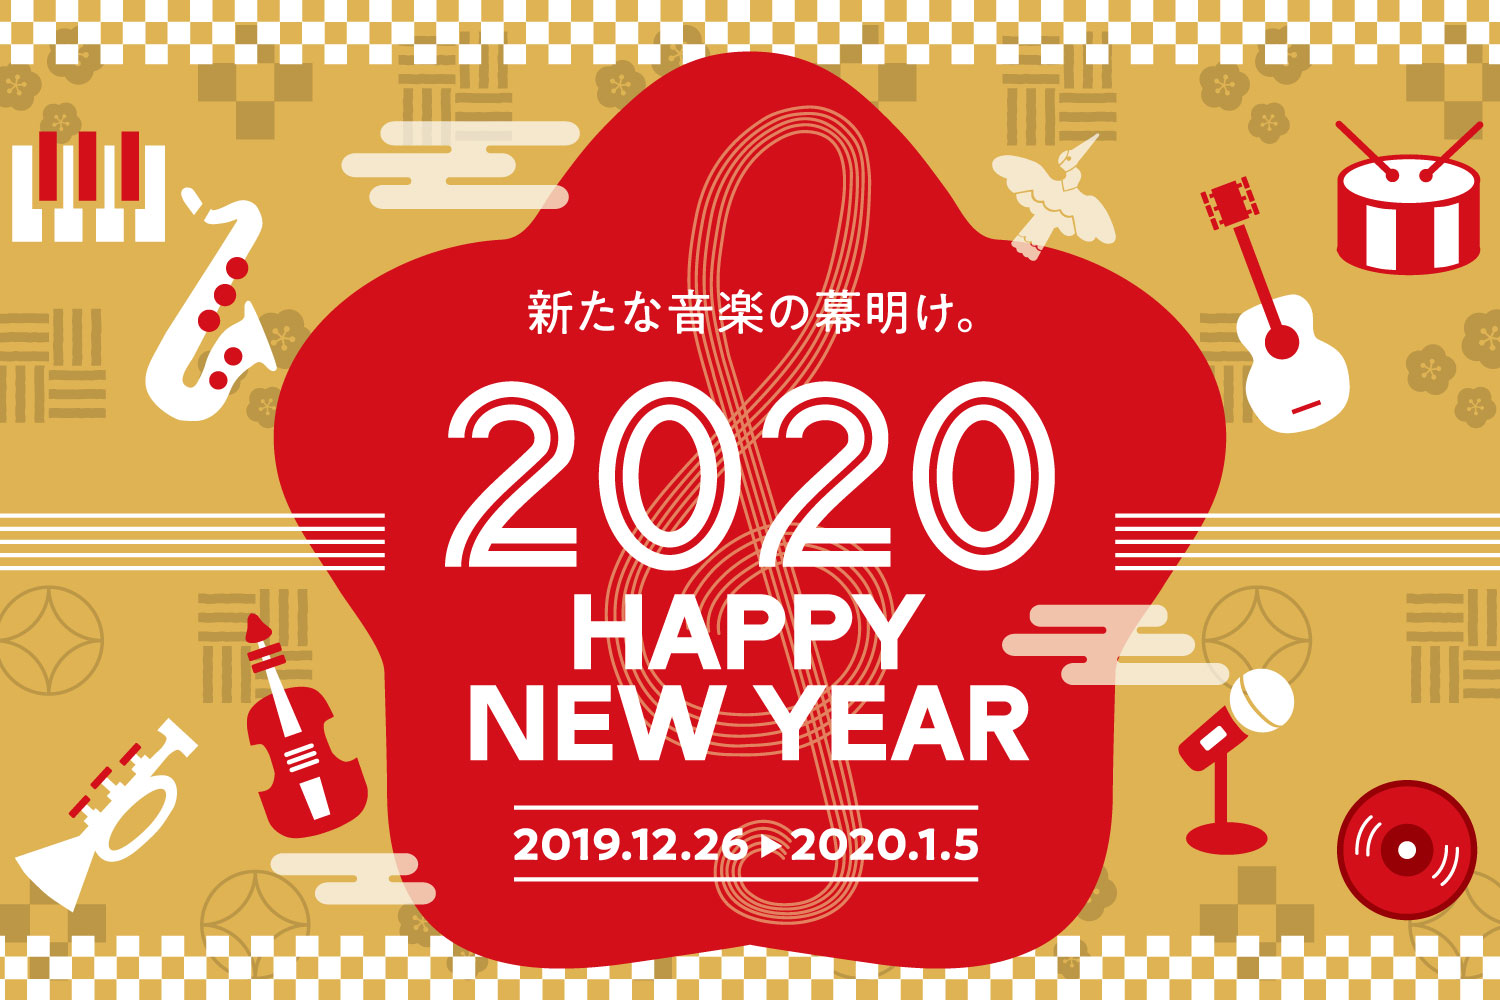 【HAPPY NEW YEAR 2020】ウクレレ福パック